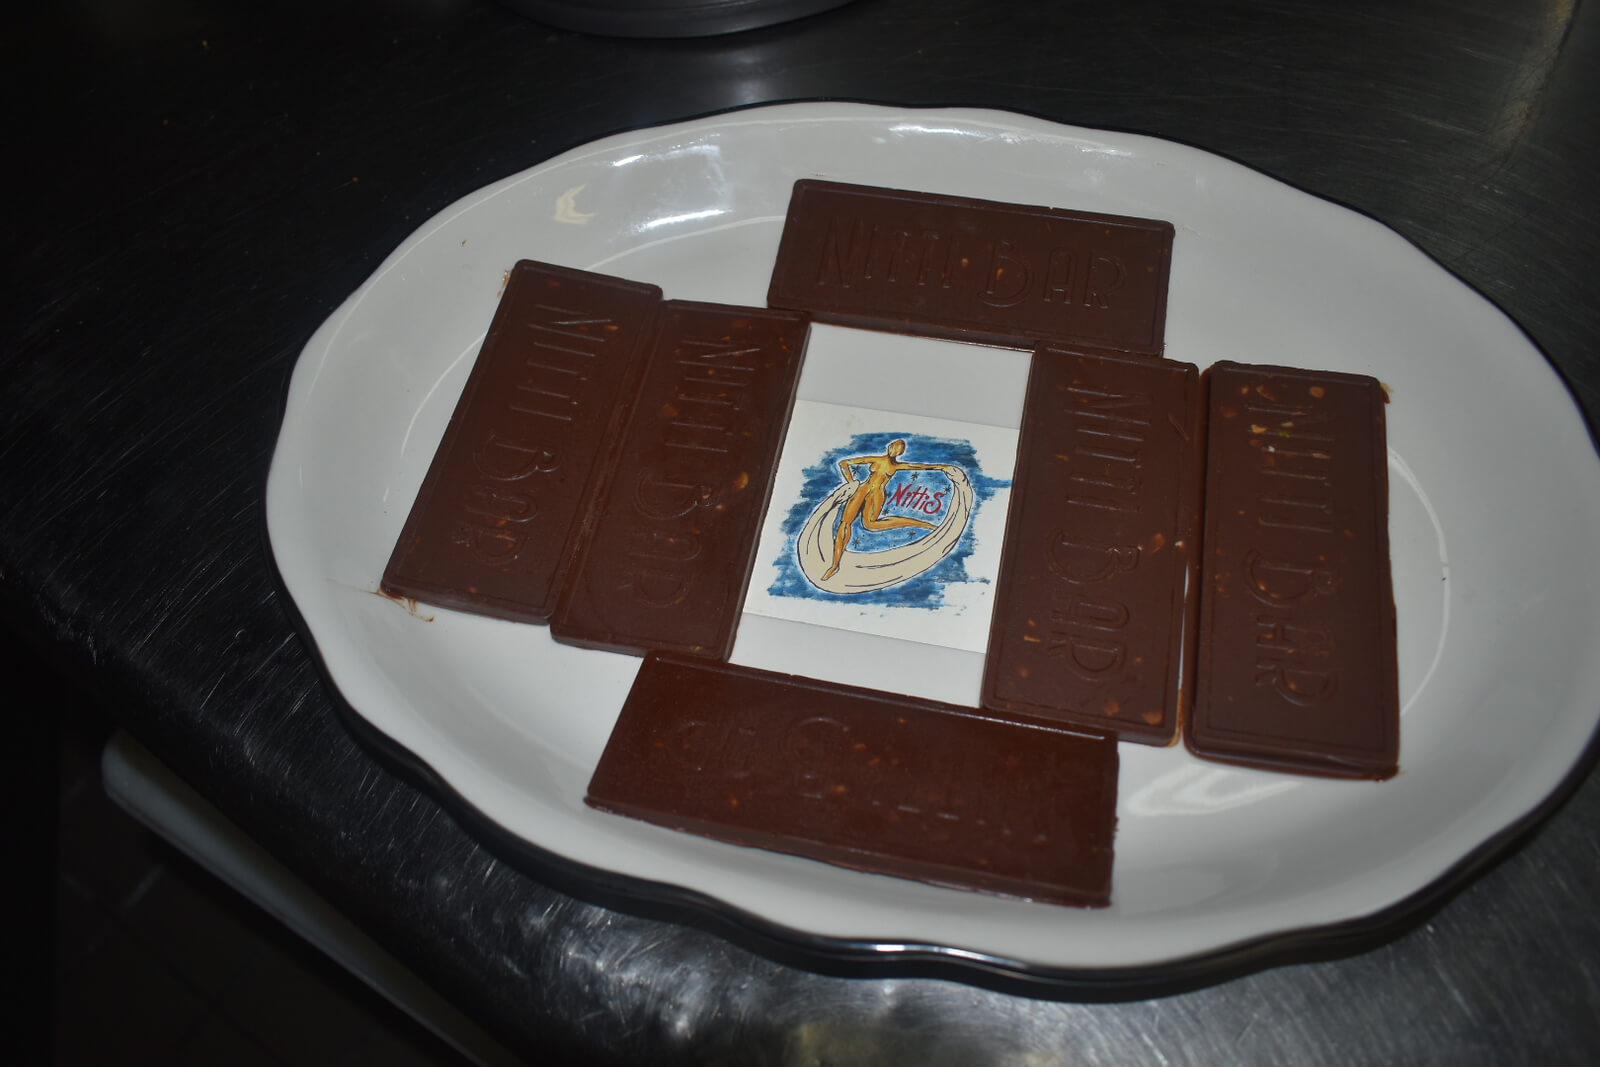 Nittis custom chocolate bars displayed on a white plate